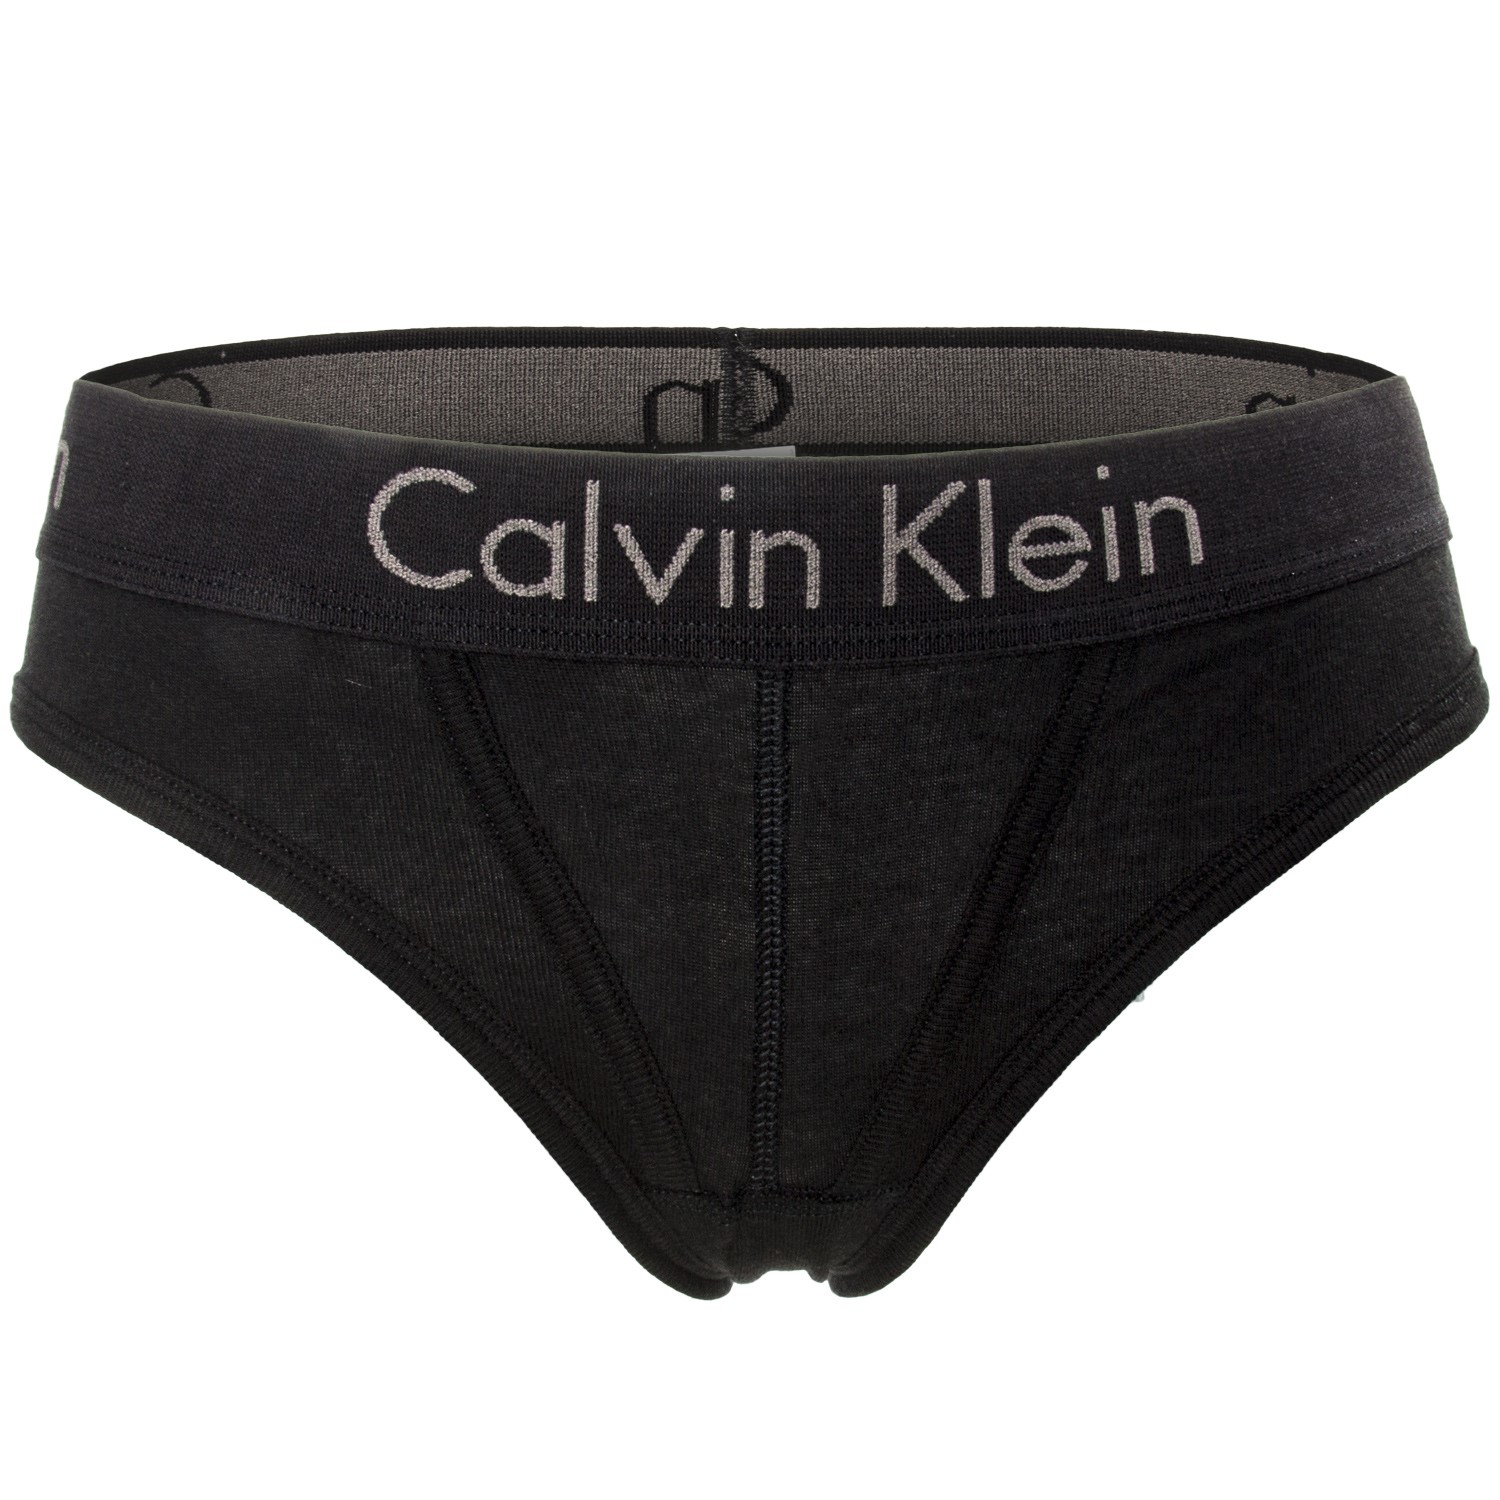 Calvin Klein Body Bikini